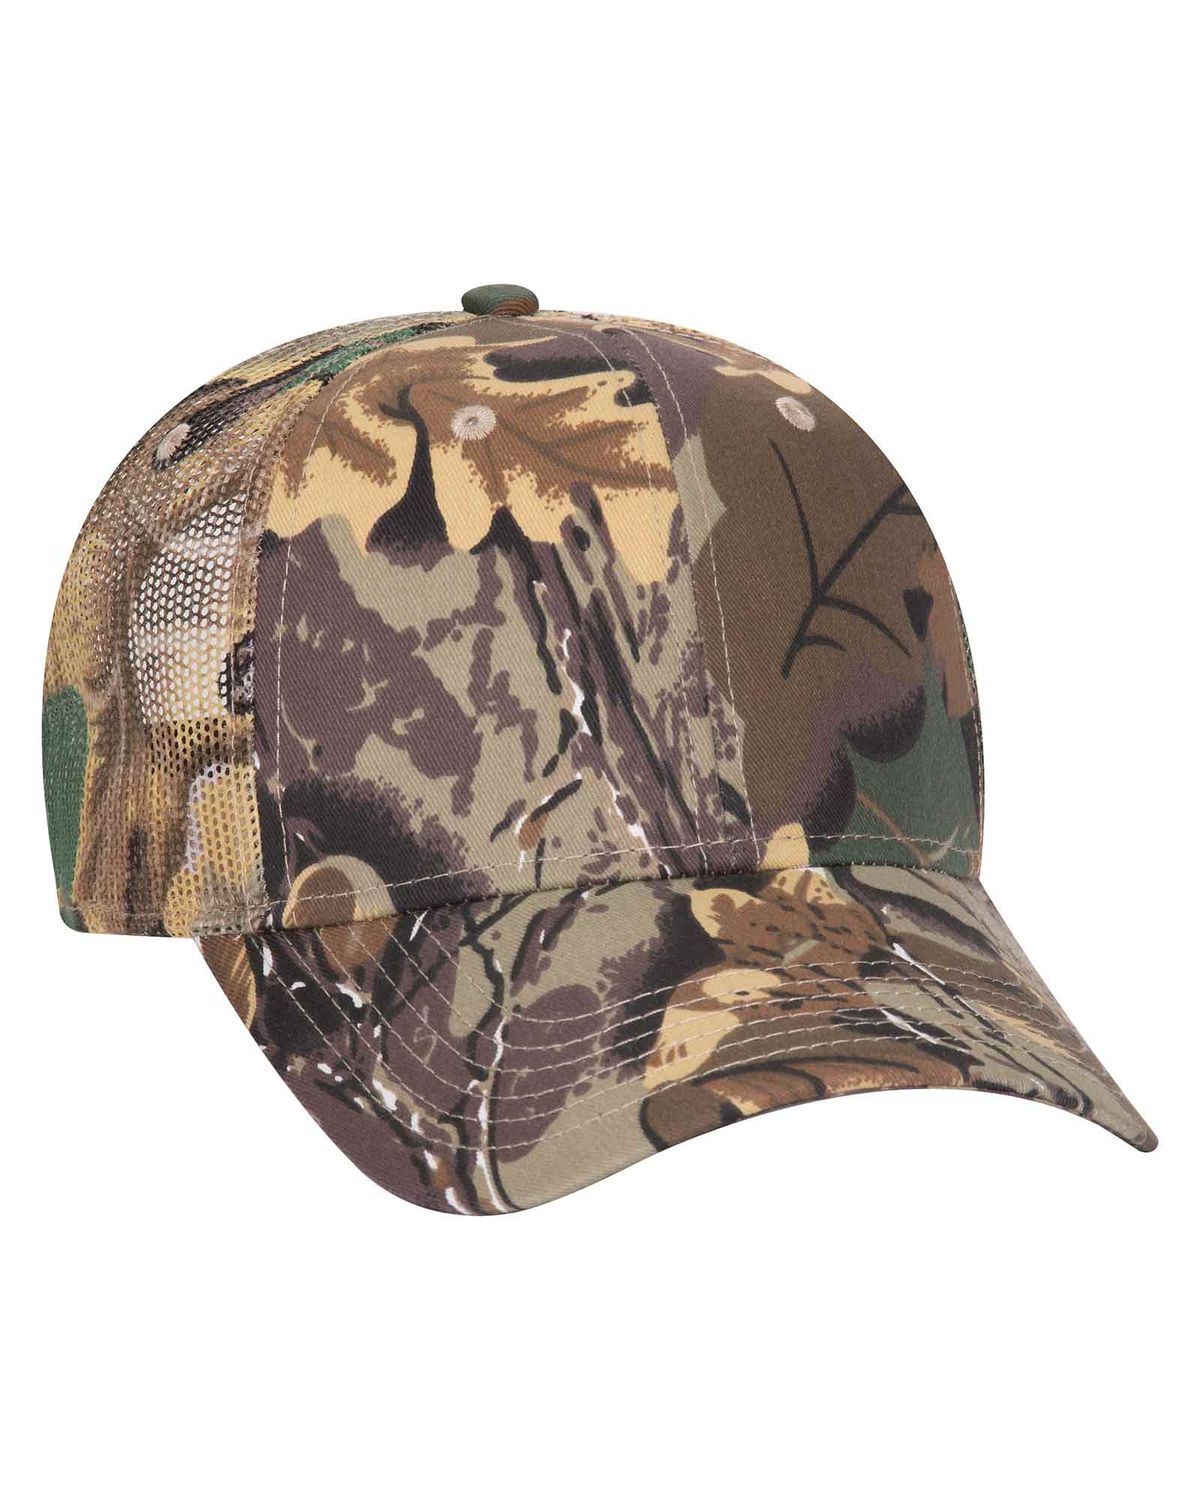 'OTTO 105 751 Otto cap camouflage 6 panel low profile mesh back trucker hat'